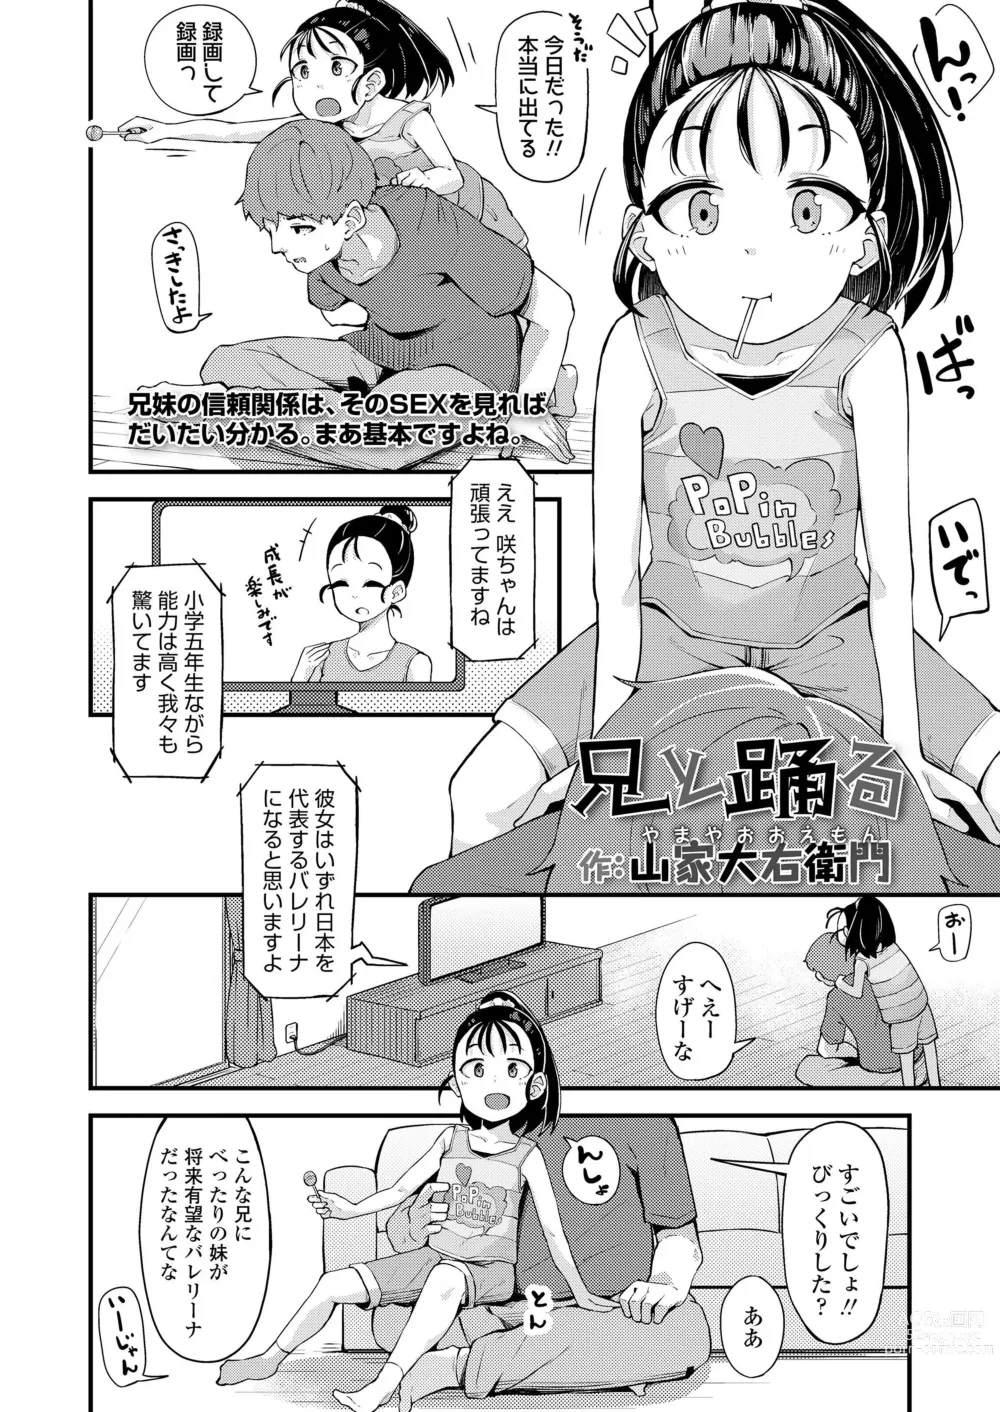 Page 2 of manga Ani to Odoru